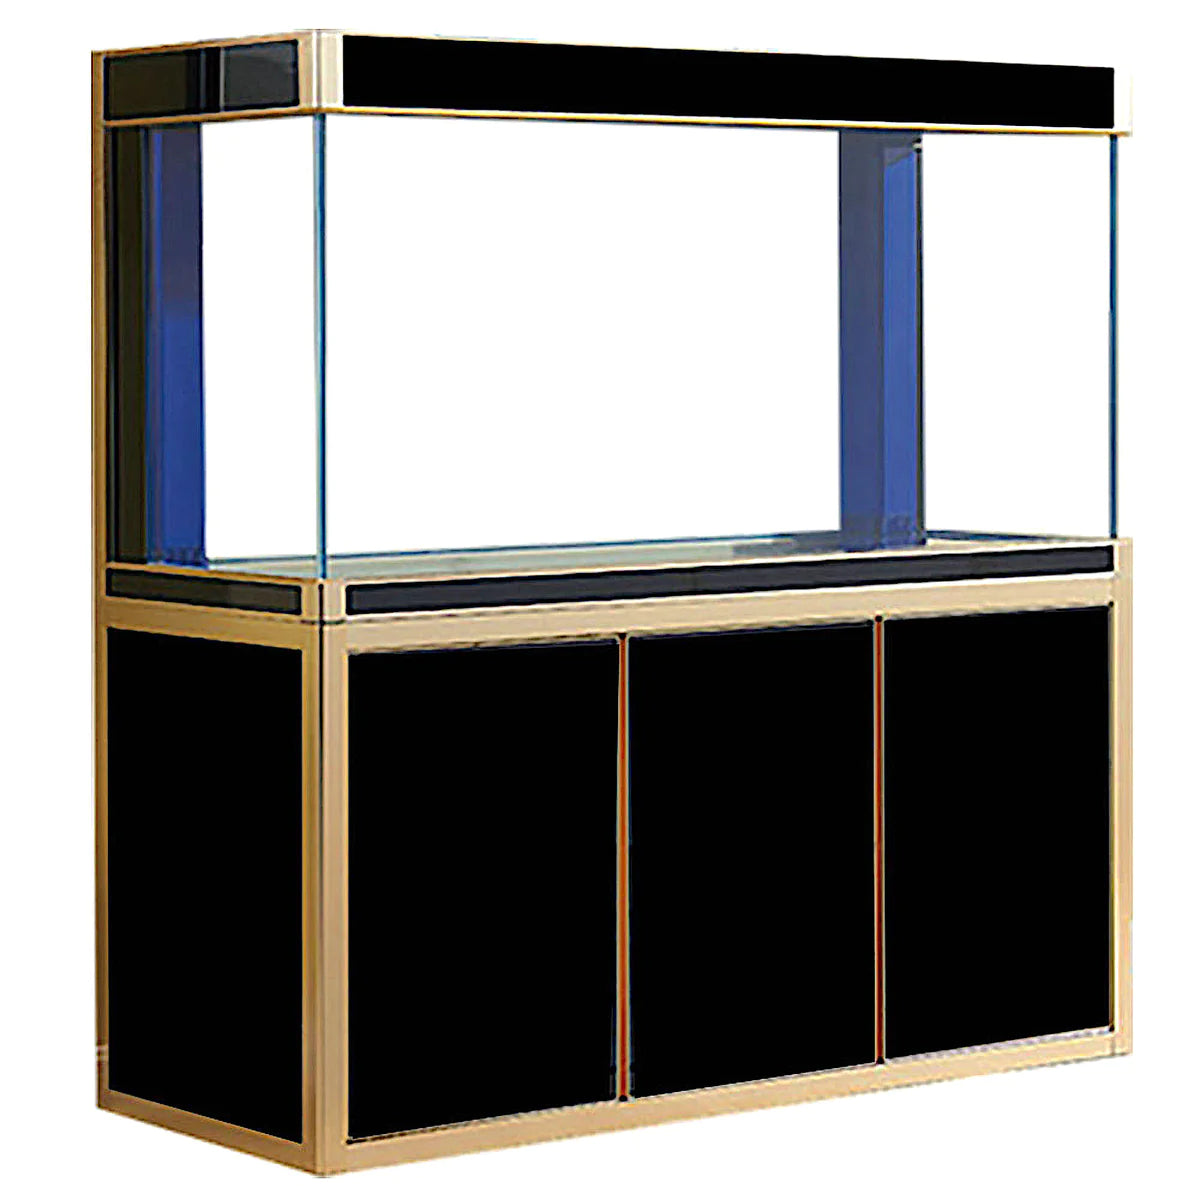 Aqua Dream 175 Gallon Tempered Glass Aquarium Black and Gold AD-1560-BK - Serenity Provision